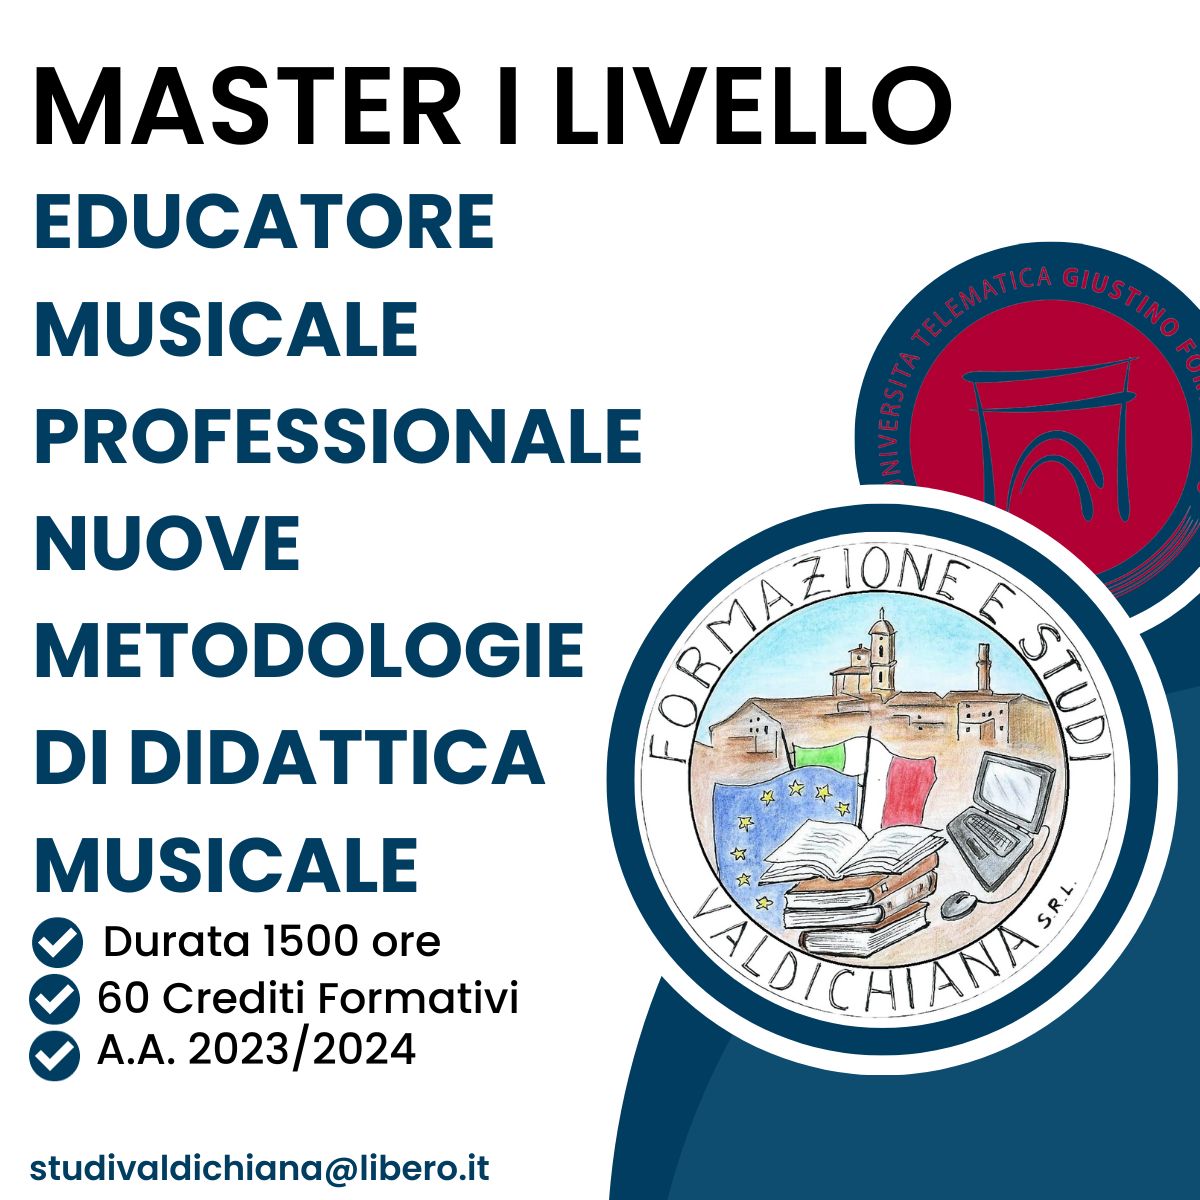 EDUCATORE MUSICALE PROFESSIONALE: NUOVE METODOLOGIE DI DIDATTICA MUSICALE